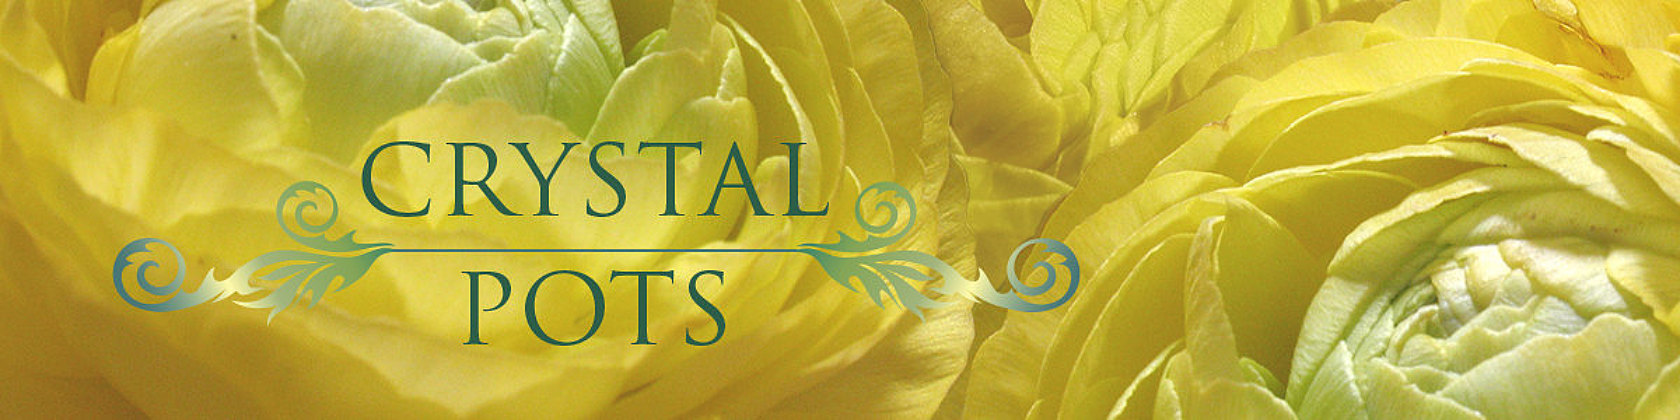 title CrystalPots on header background image of yellow ranunculi